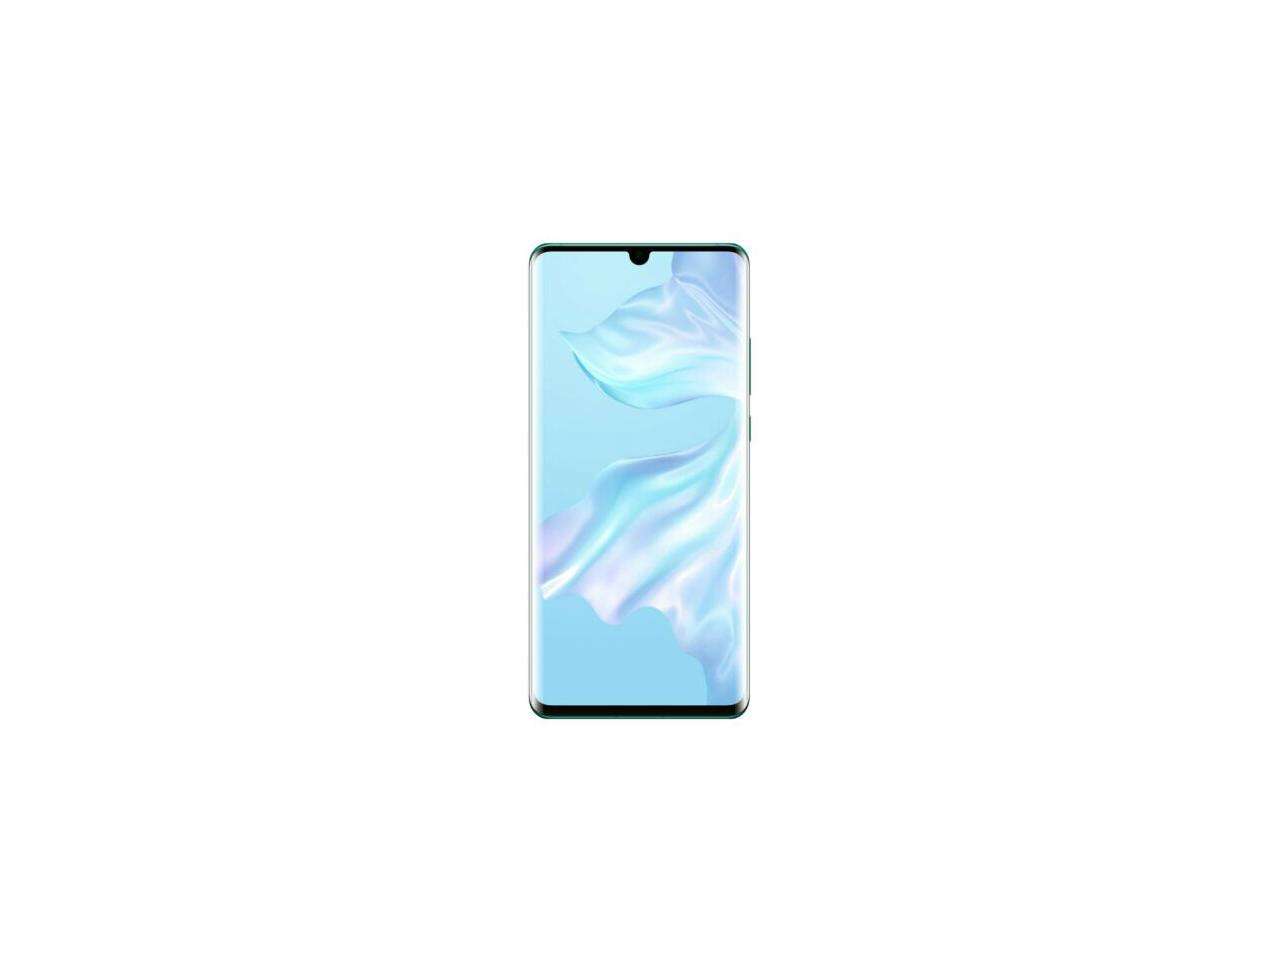 Huawei P30 PRO Dual/Hybrid-SIM 256GB VOG-L29 Factory Unlocked 4G/LTE Smartphone - Breathing Crystal